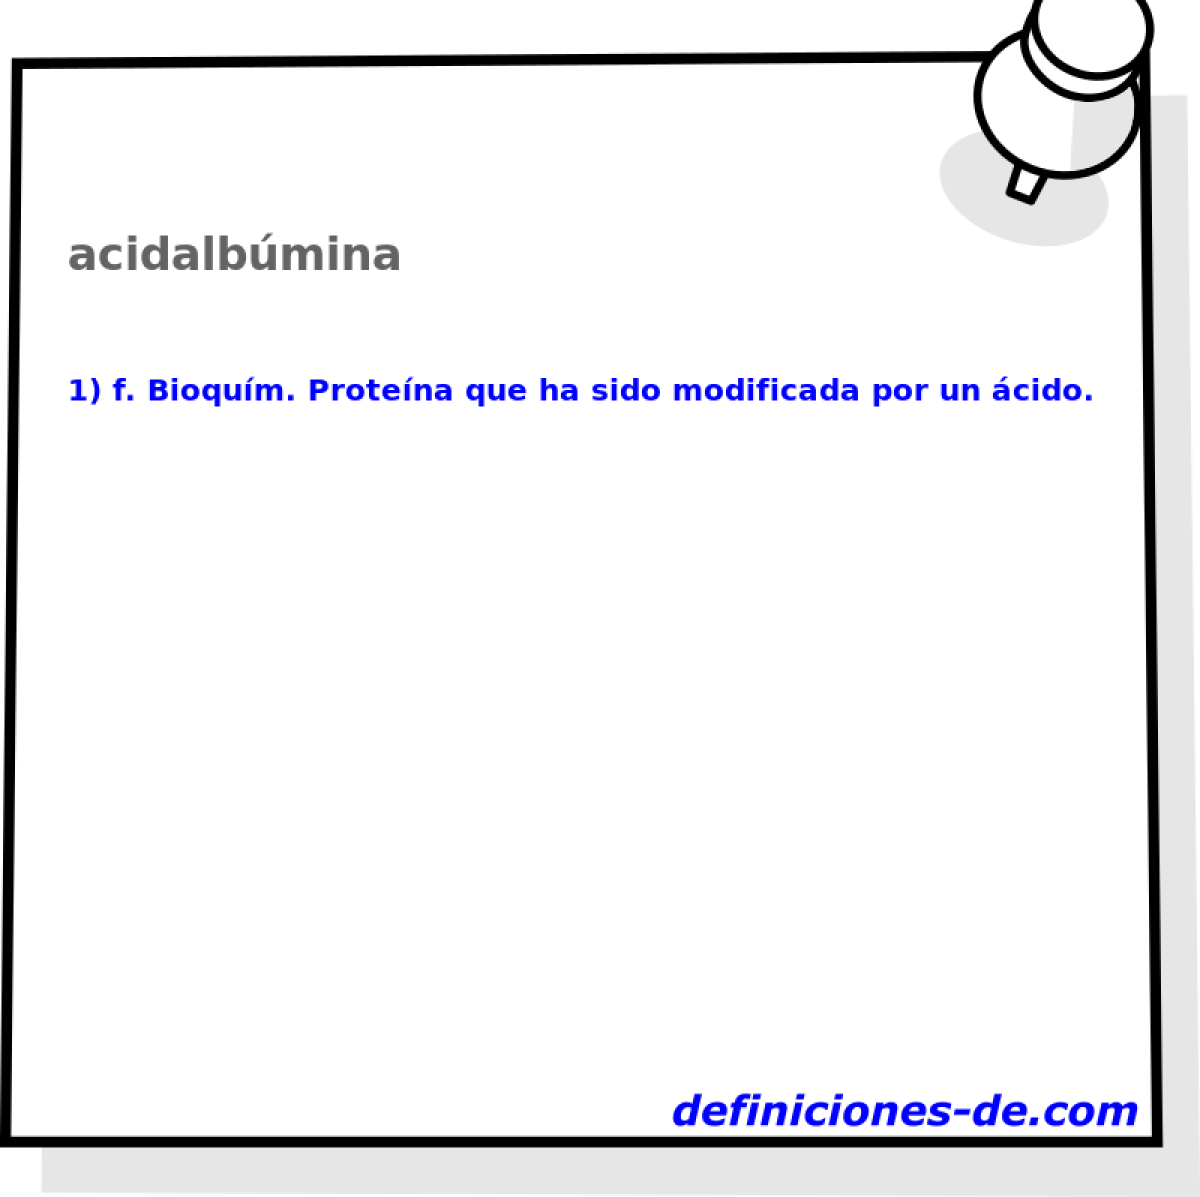 acidalbmina 